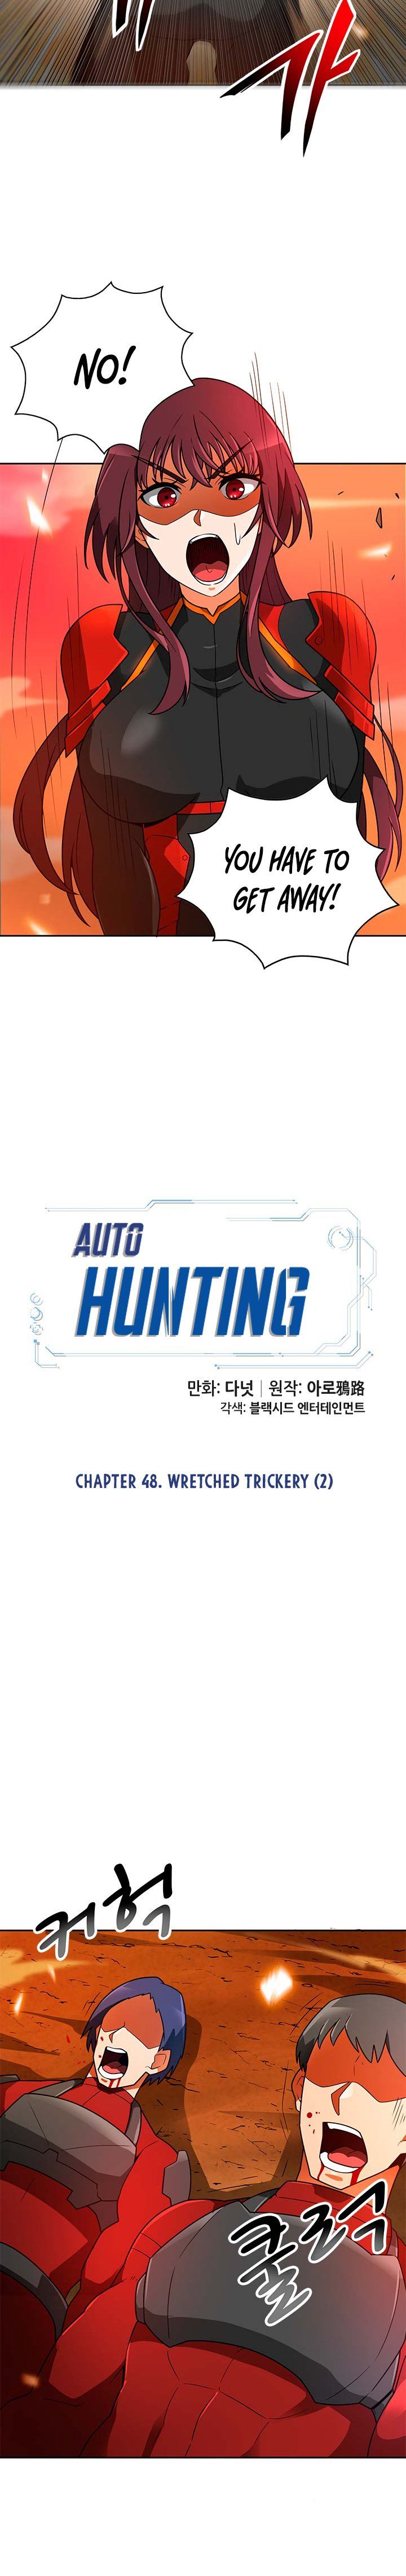 Auto Hunting 48 6